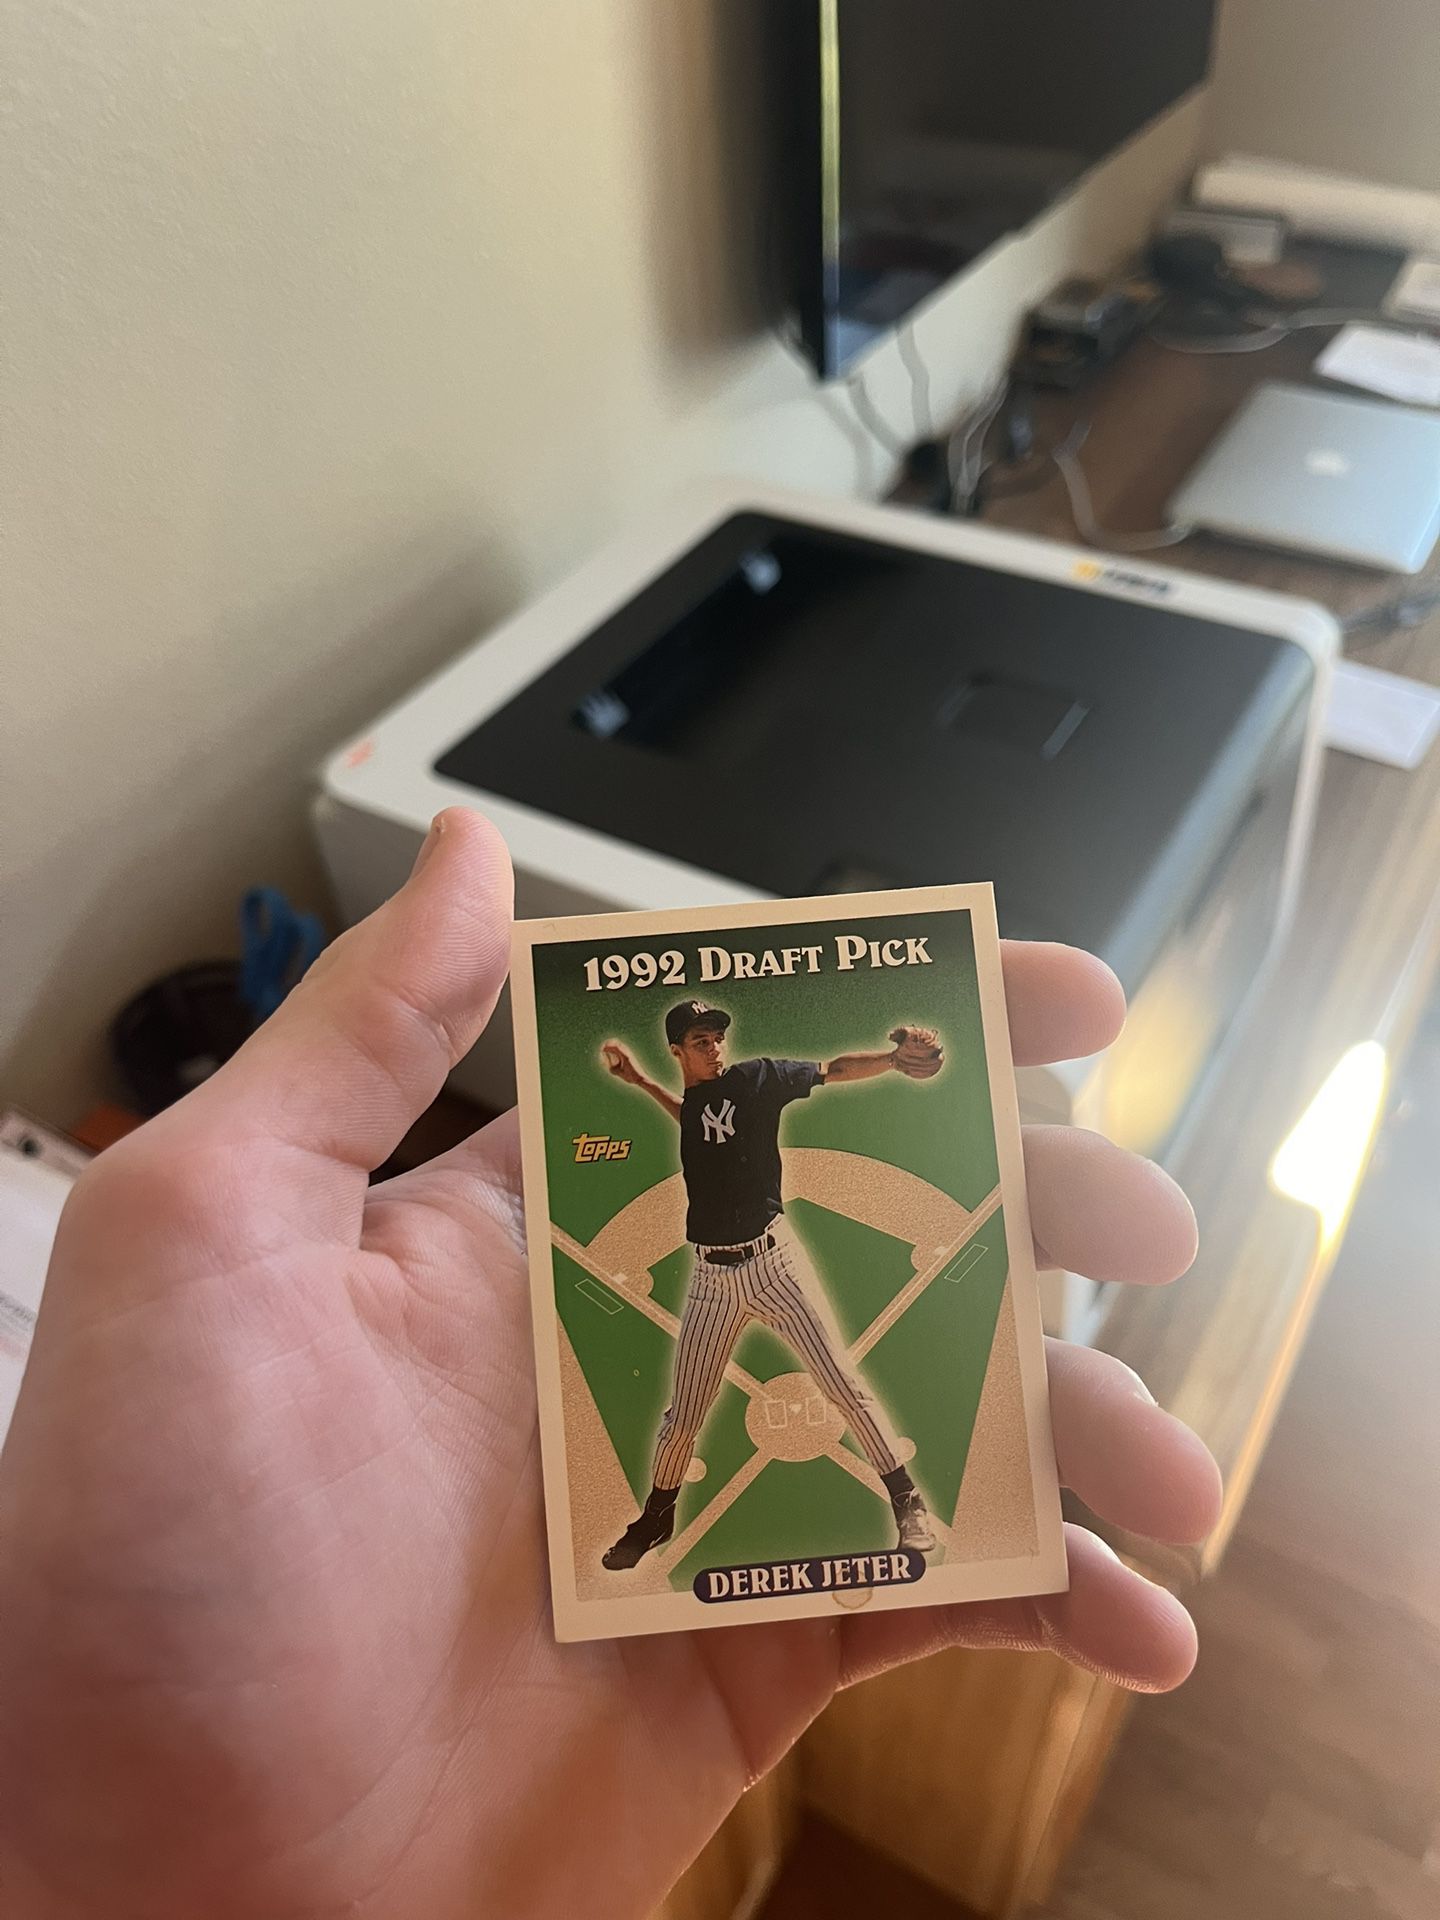 Derek Jeter 1992  Draft Pick Card